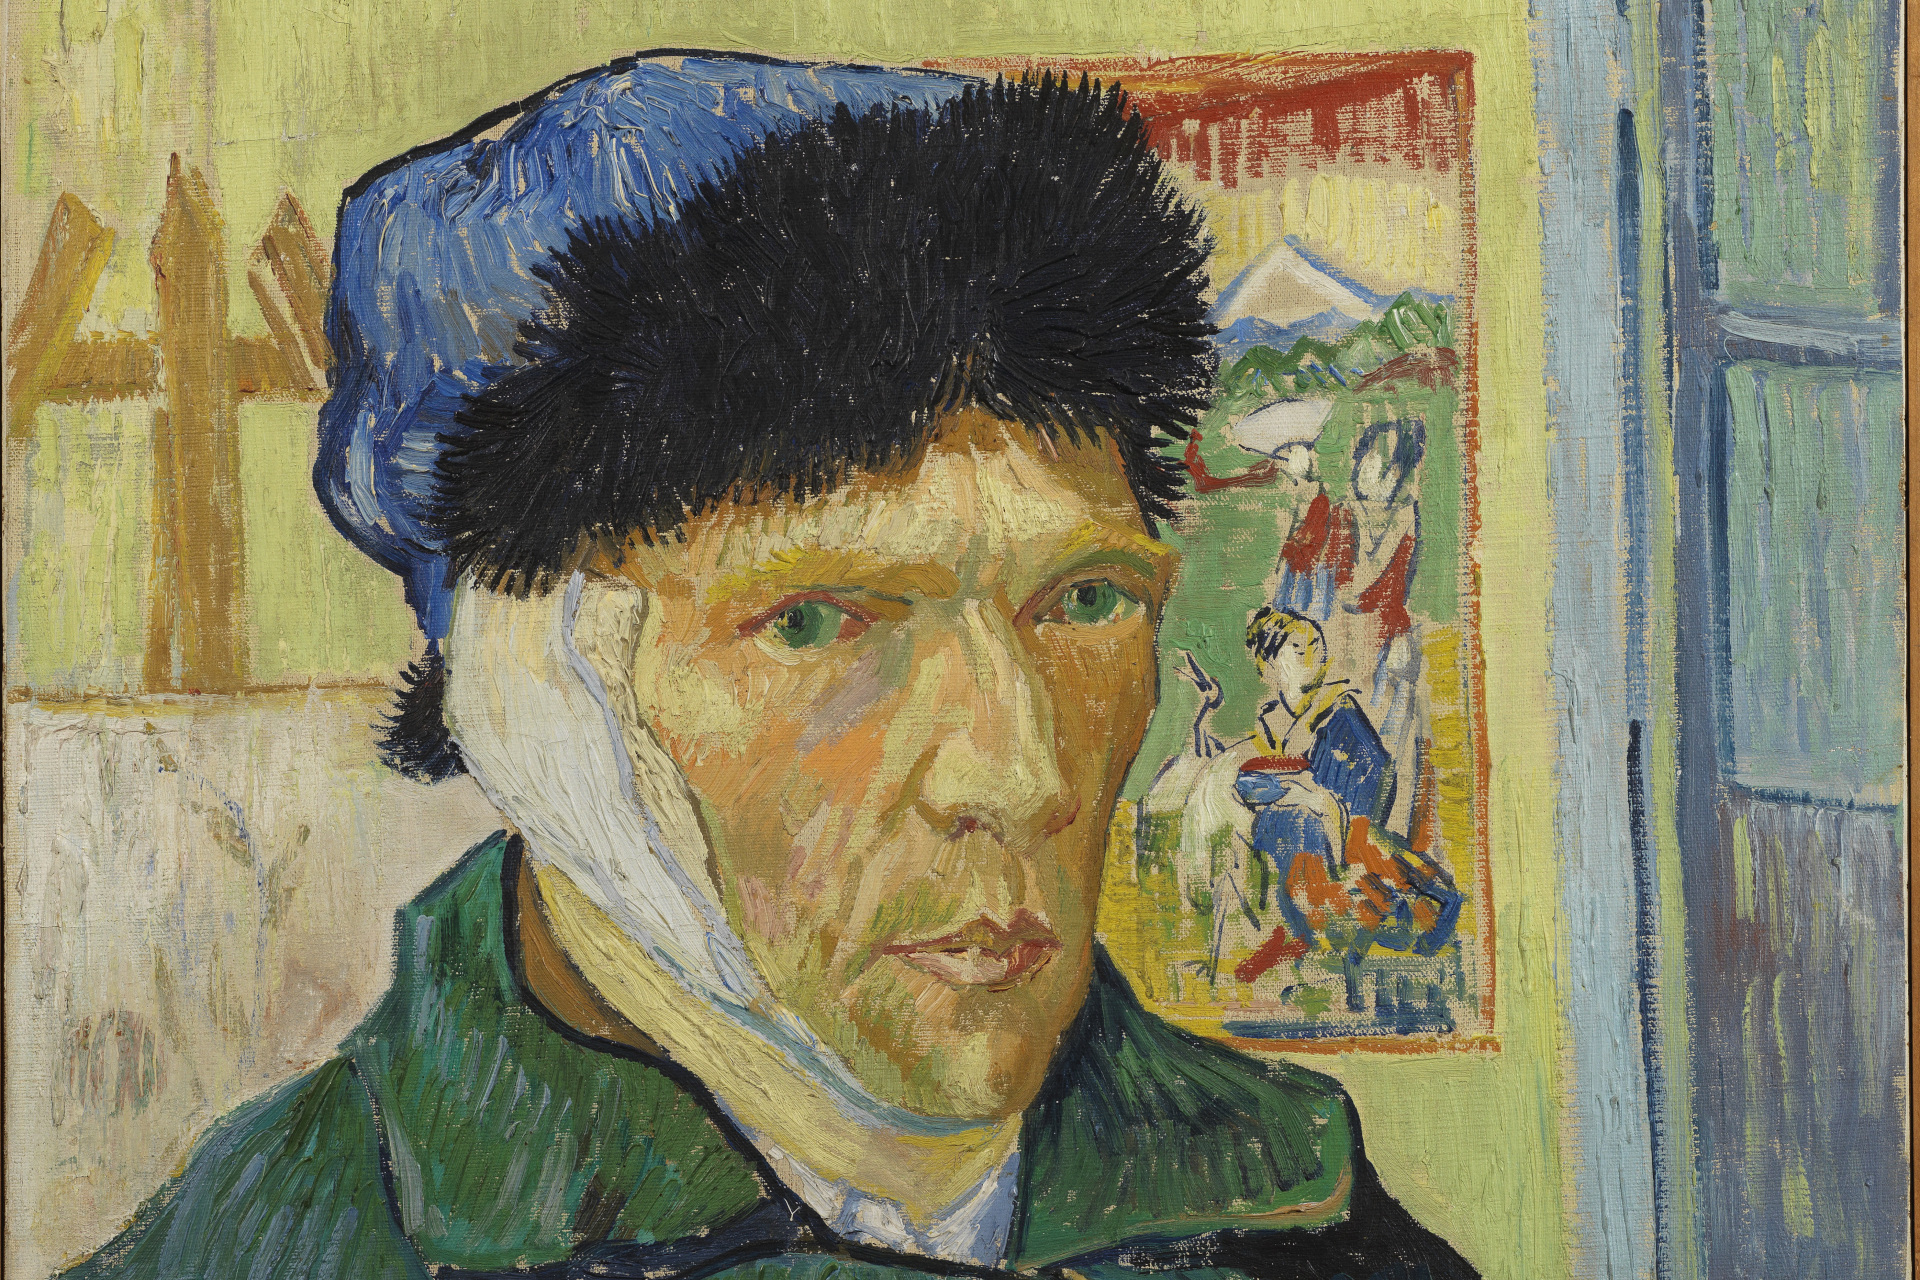 Vincent van Gogh (1853 - 1890), Self-Portrait with Bandaged Ear, January 1889, The Courtauld Gallery, London (Samuel Courtauld Trust)